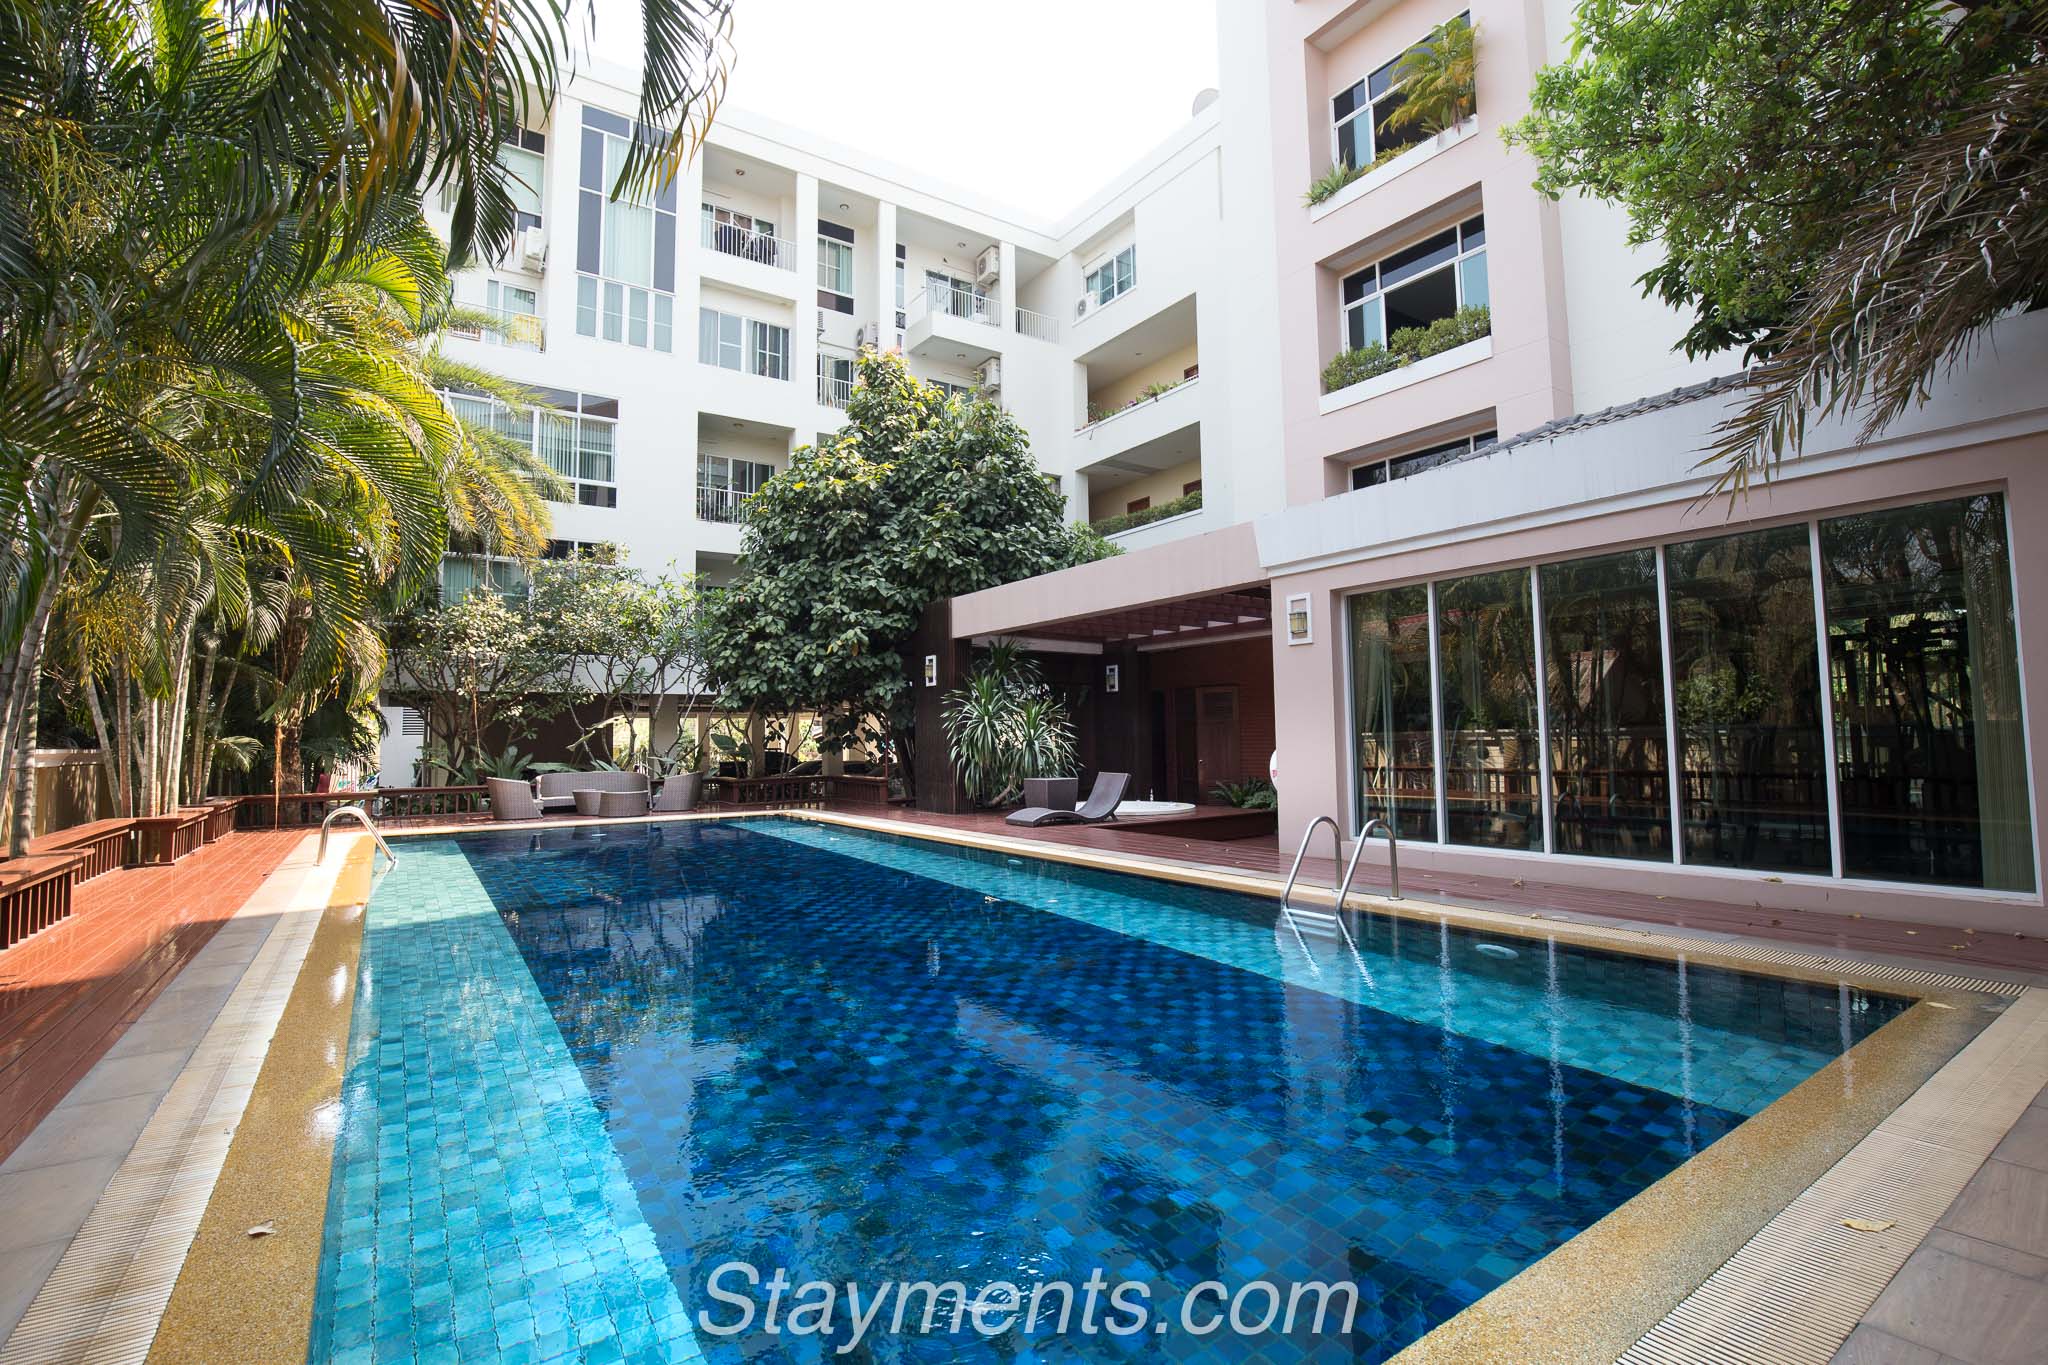 47 SqM Studio Condo for rent at Baan Suan Greenery Hill